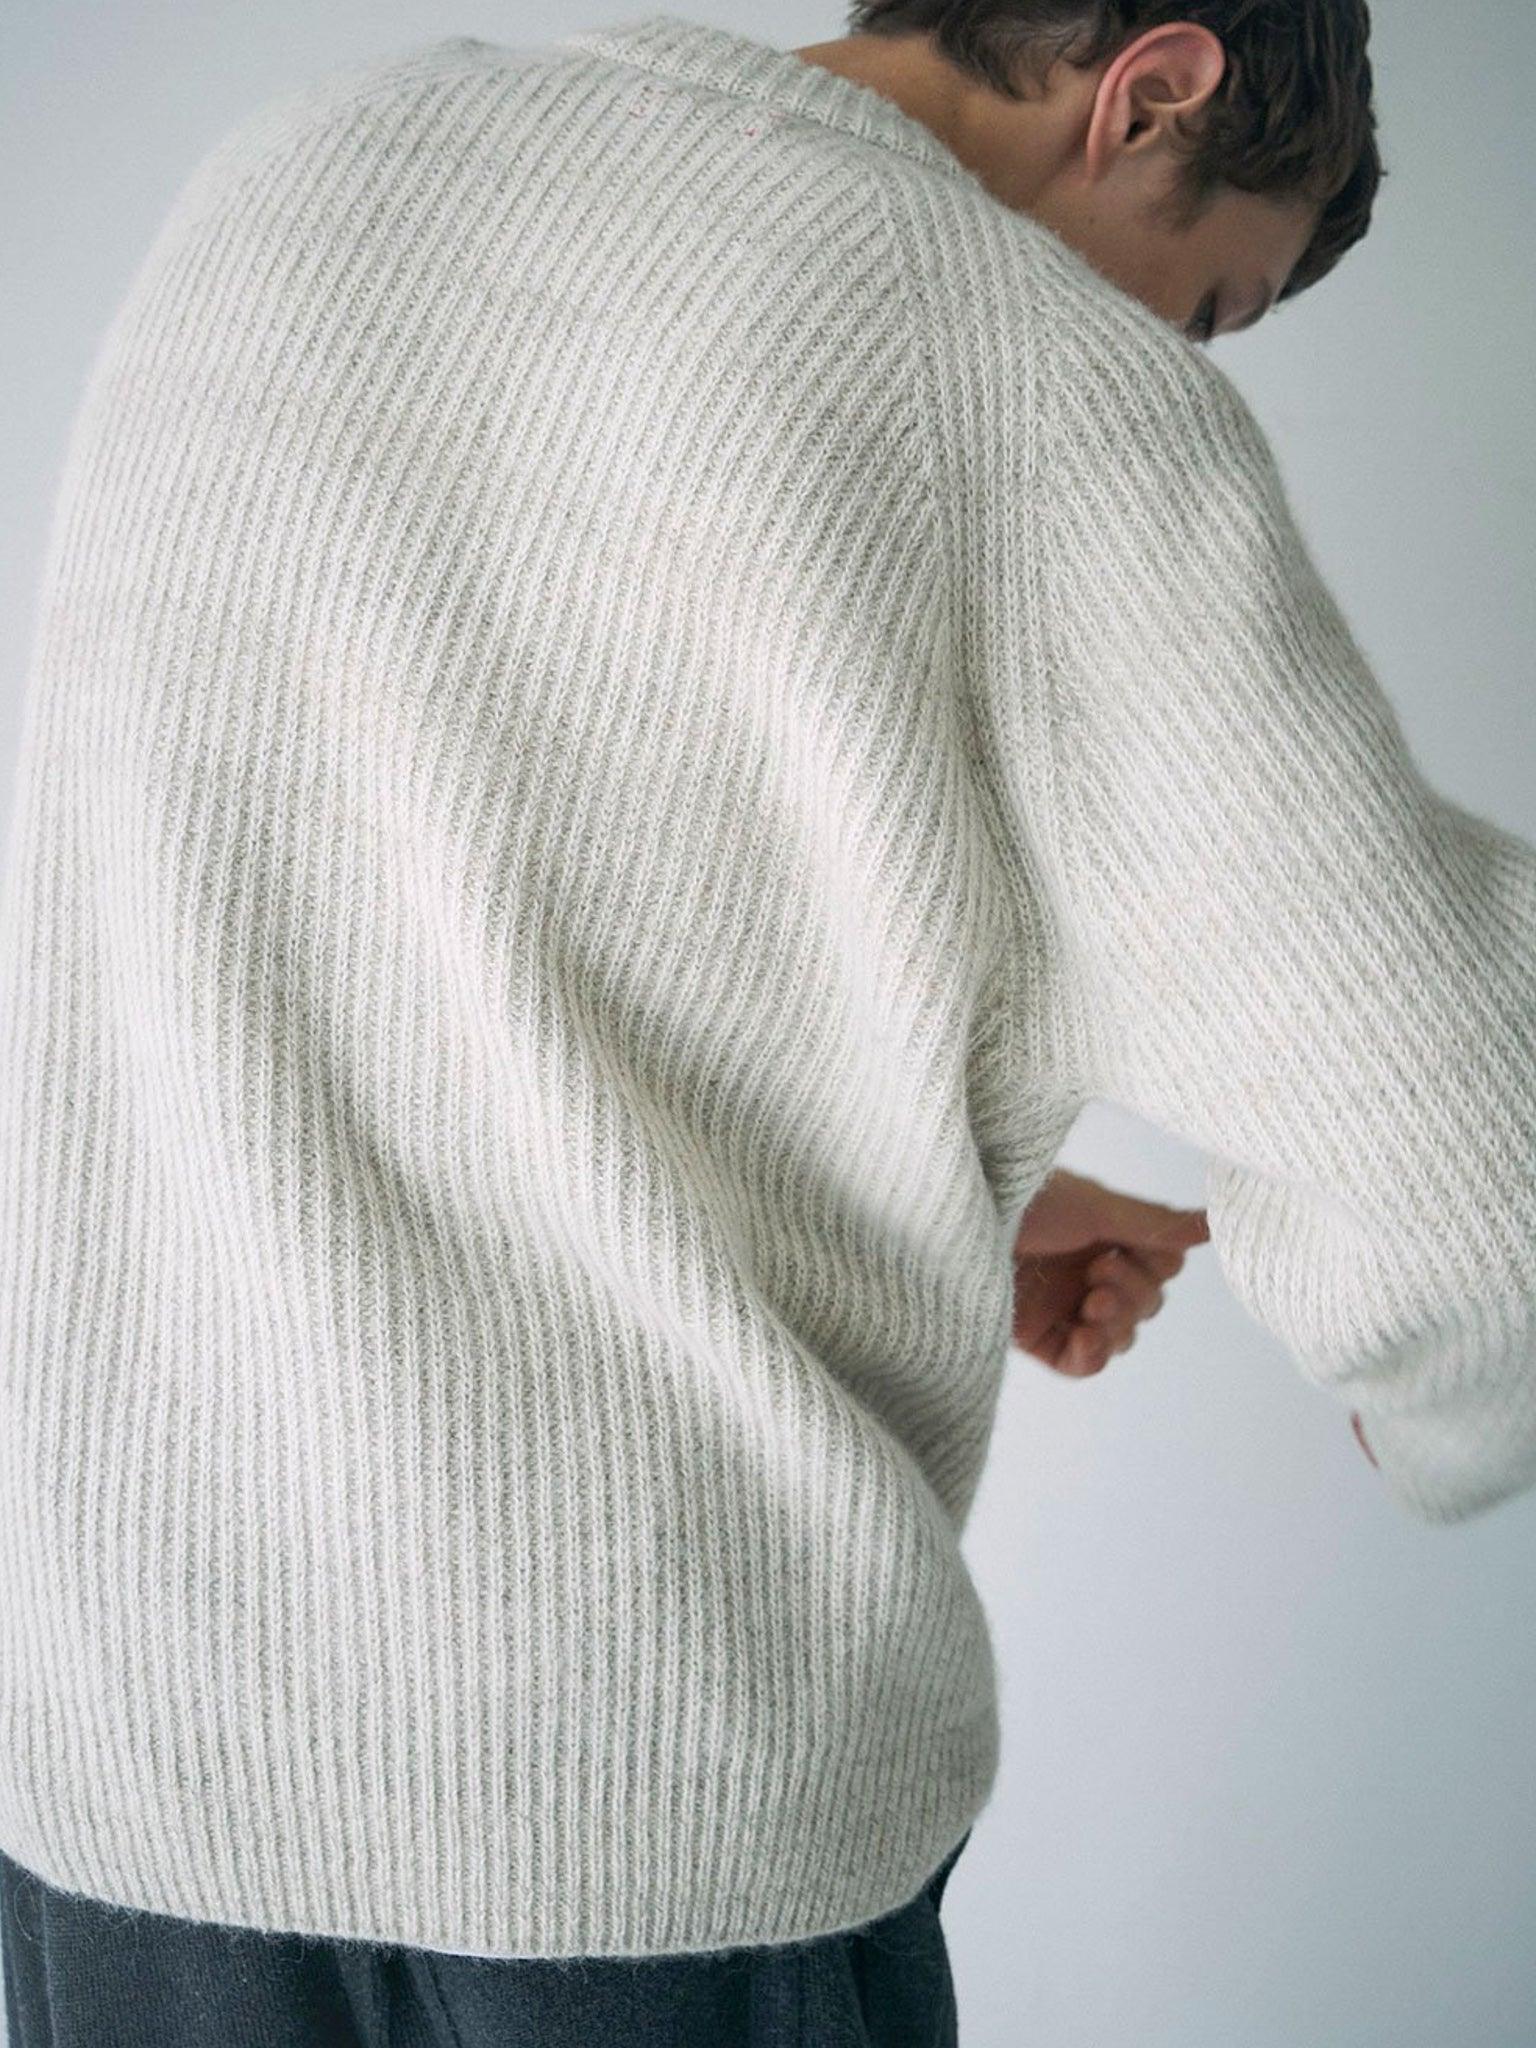 Namu Shop - Unfil Royal Baby Alpaca Ribbed Knit Sweater - Off White Mix